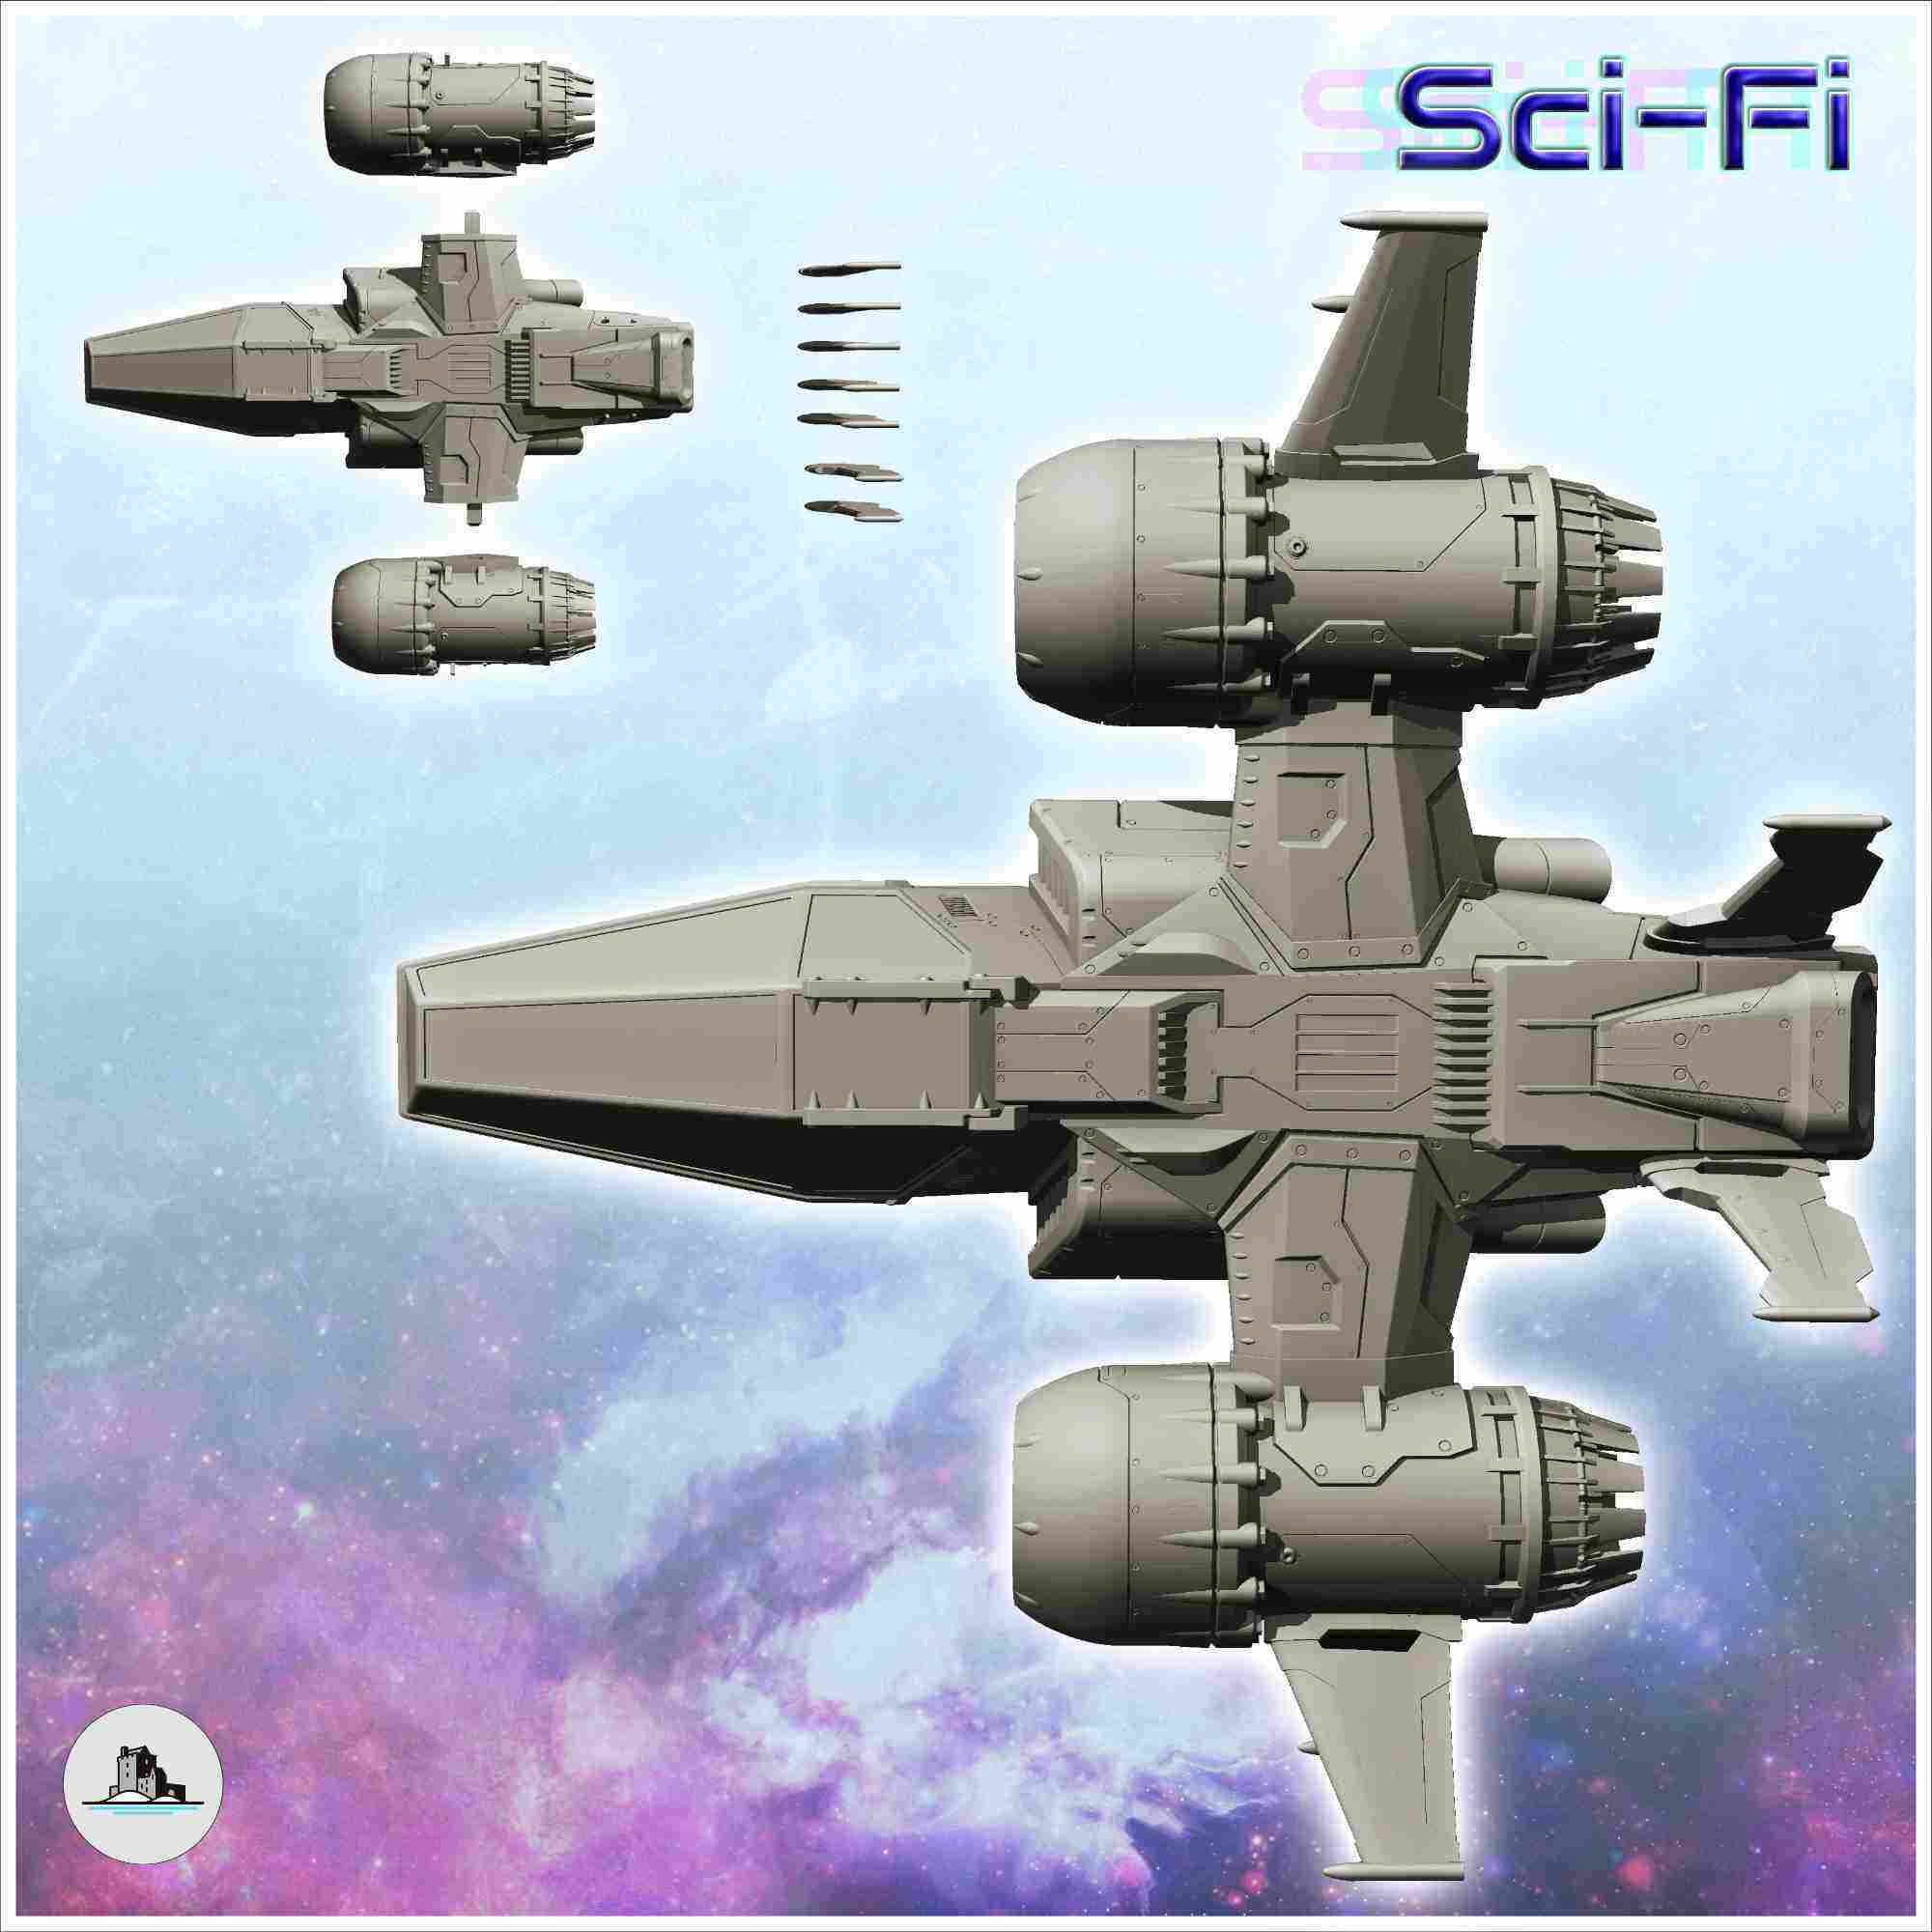 Mercurialis spaceship (40) - sci-fi science fiction future 4